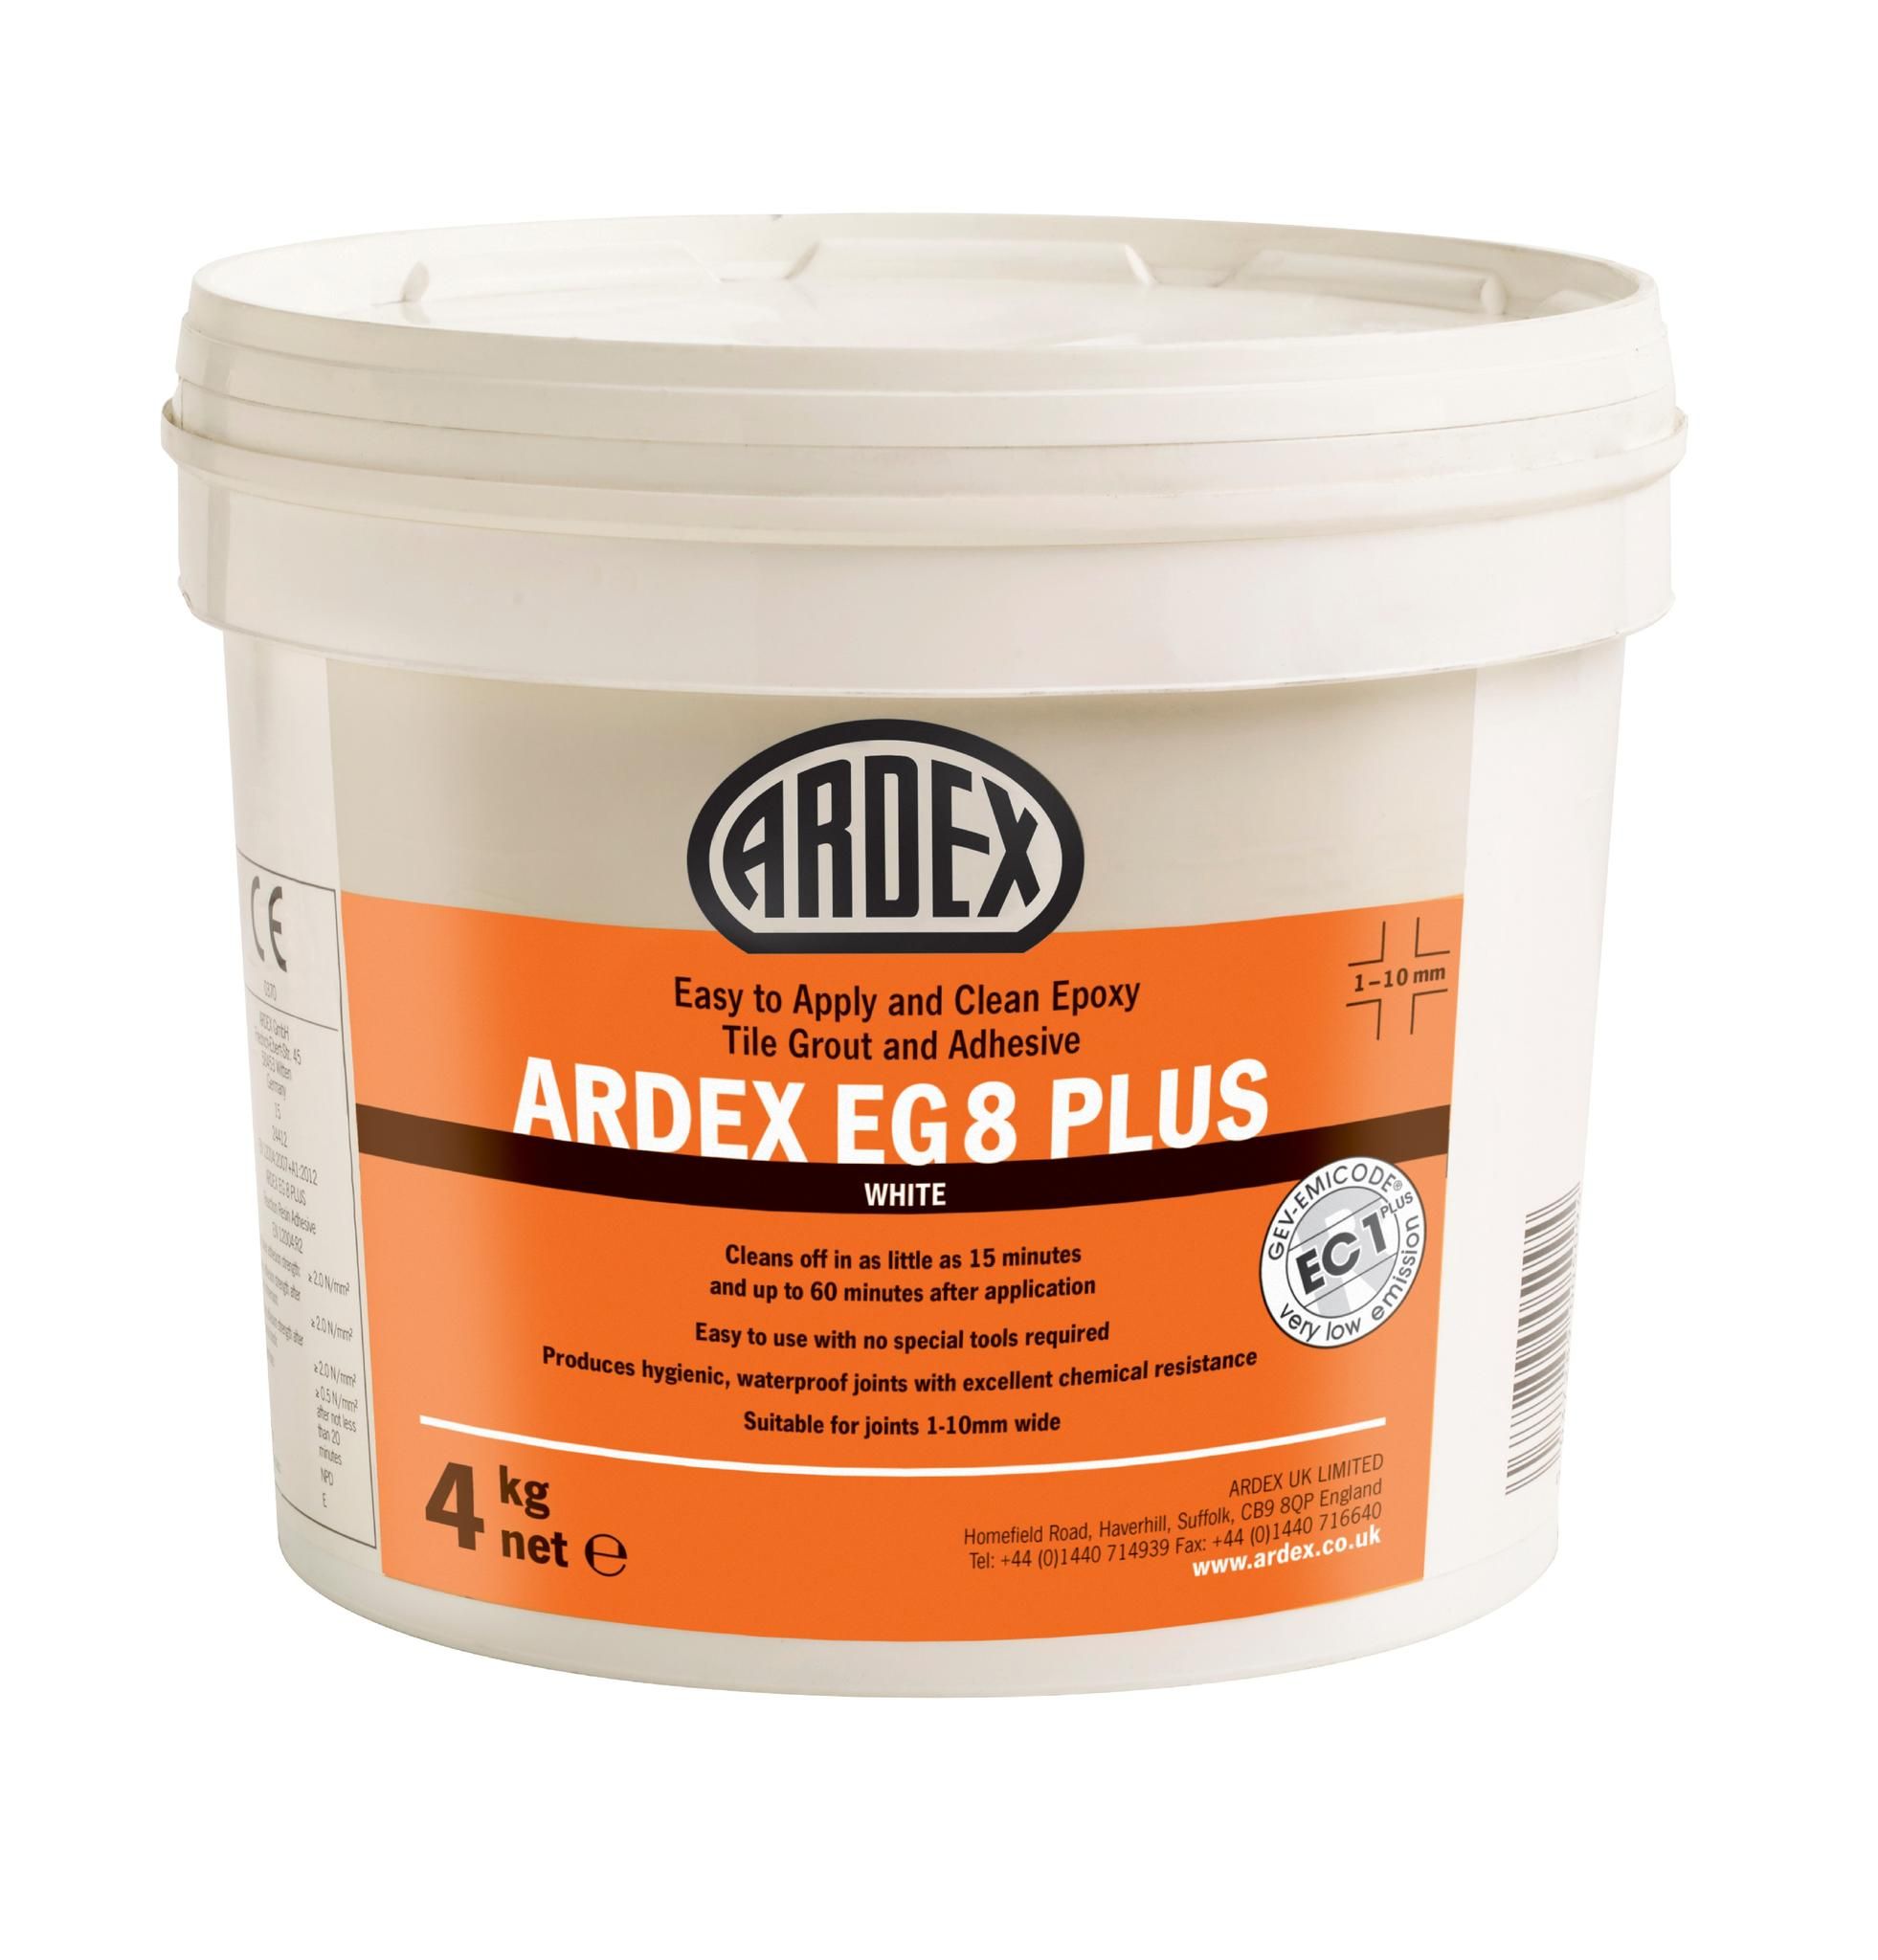 ARDEX EG 8 PLUS Easy To Apply & Clean Epoxy Tile Grout